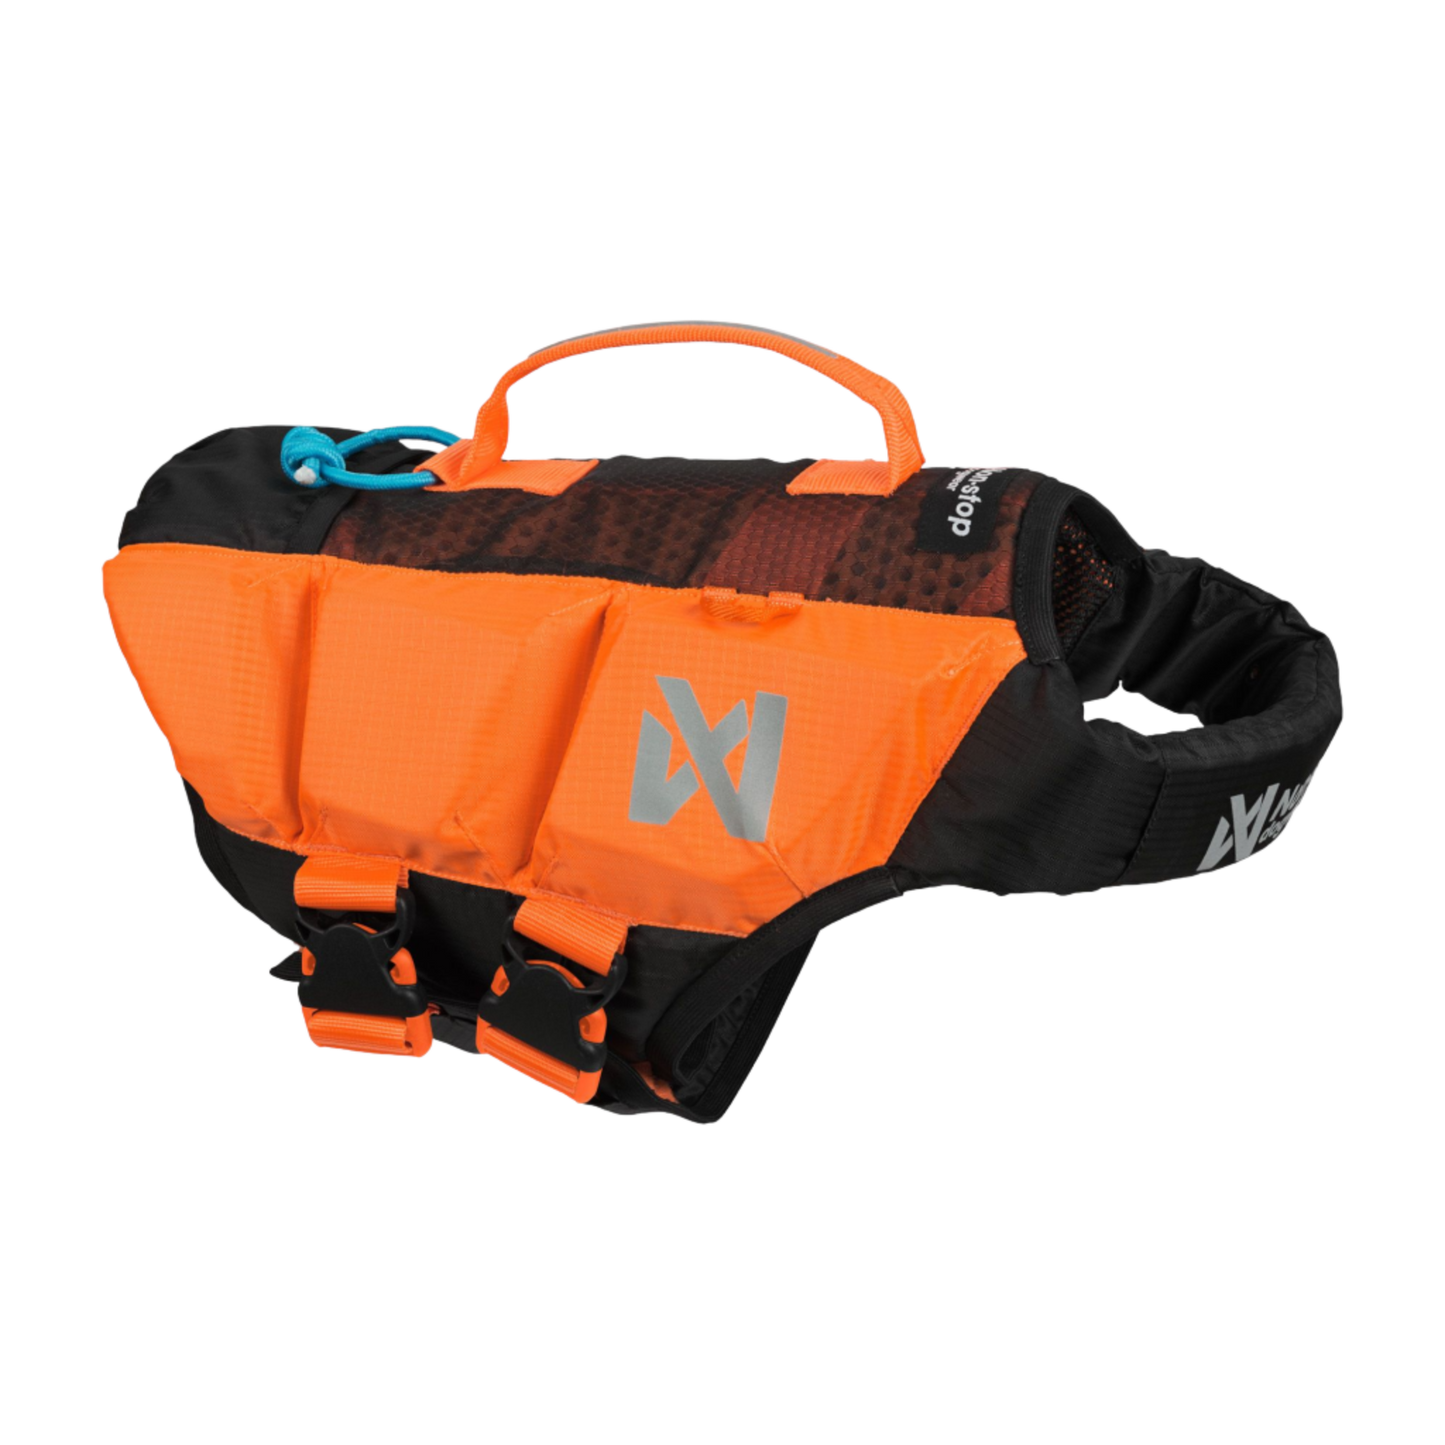 Non-stop dogwear Protector life jacket